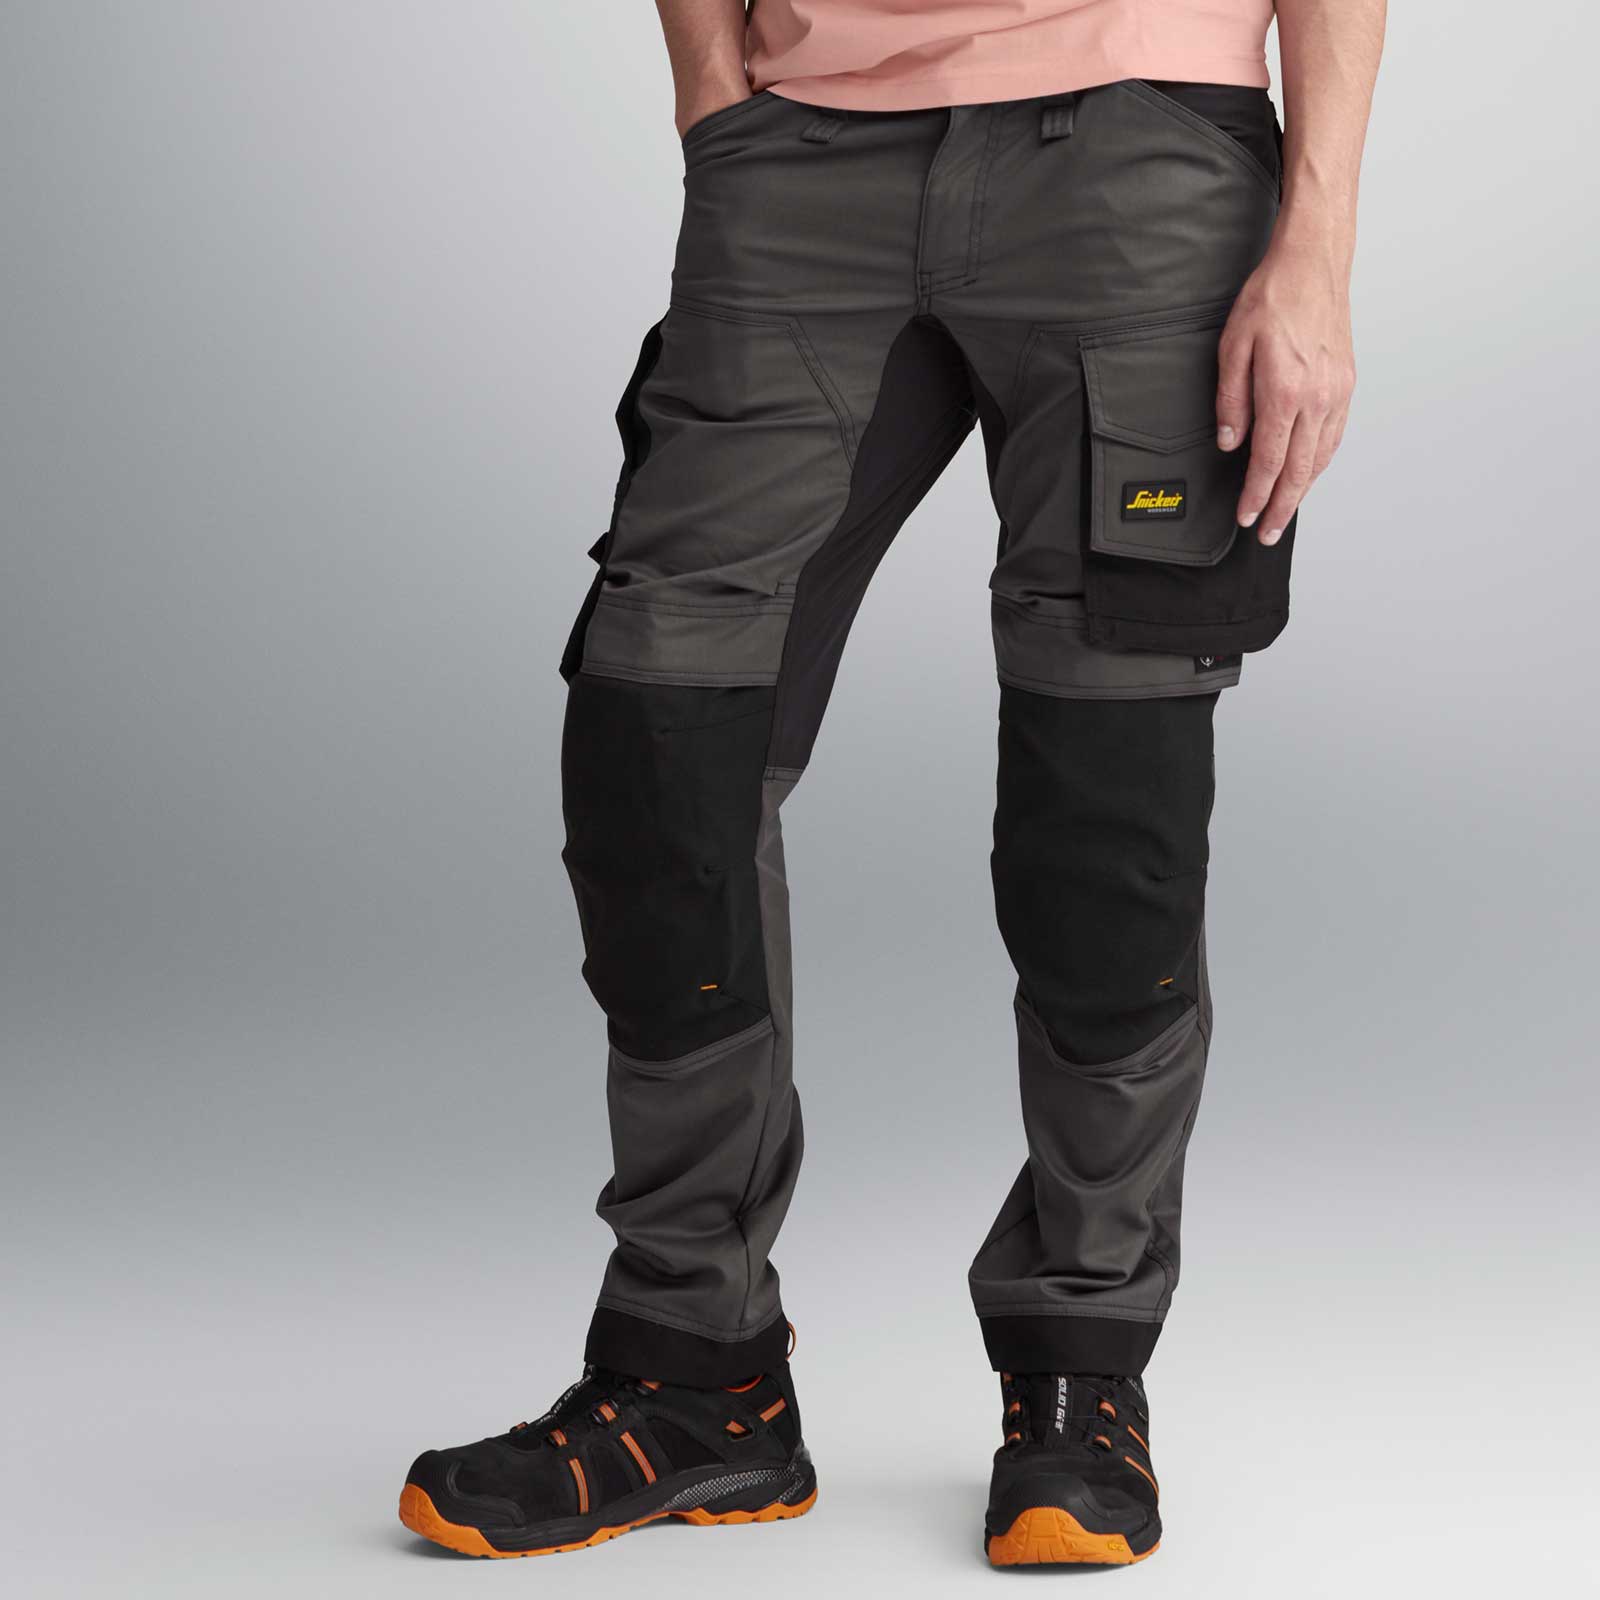 Scruffs Work Trousers  Trade Flex Slim Fit Straight Leg with Stretch Black  Grey  eBay